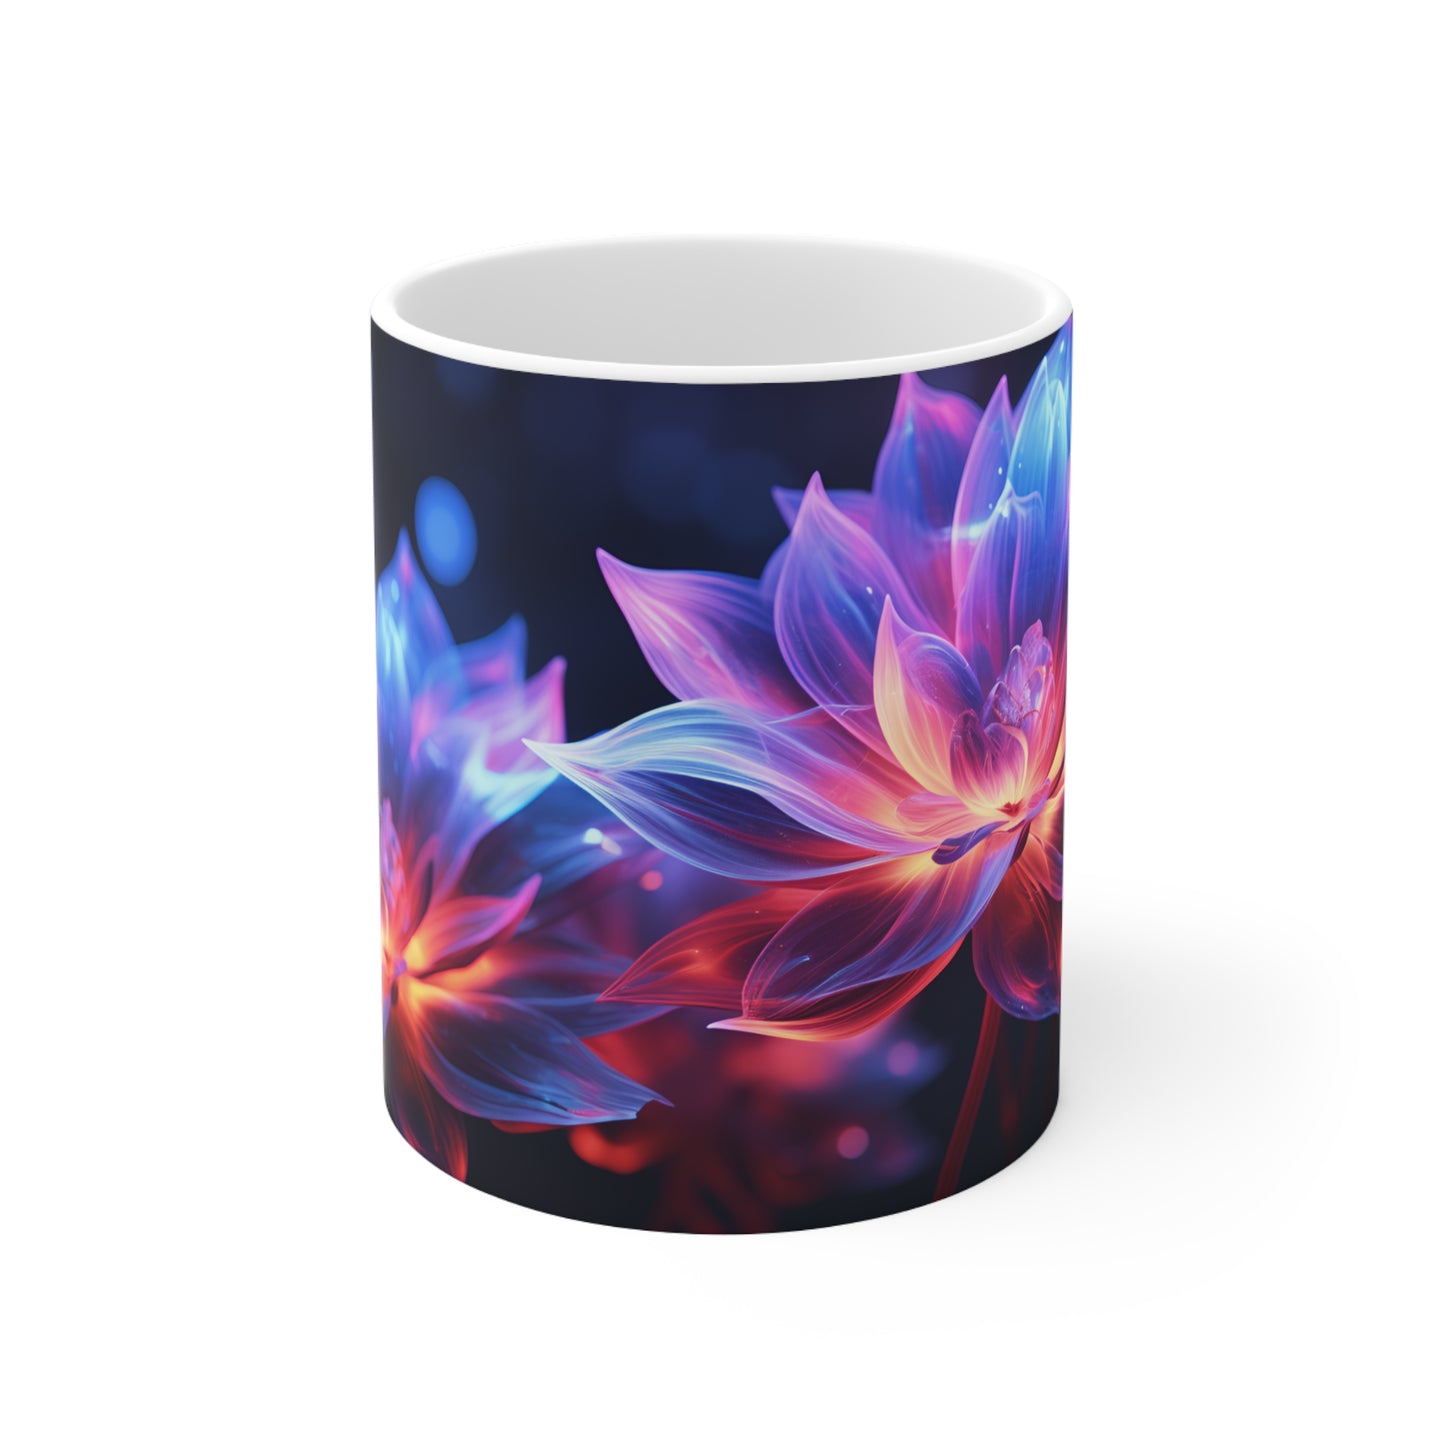 Neon Flower Mug